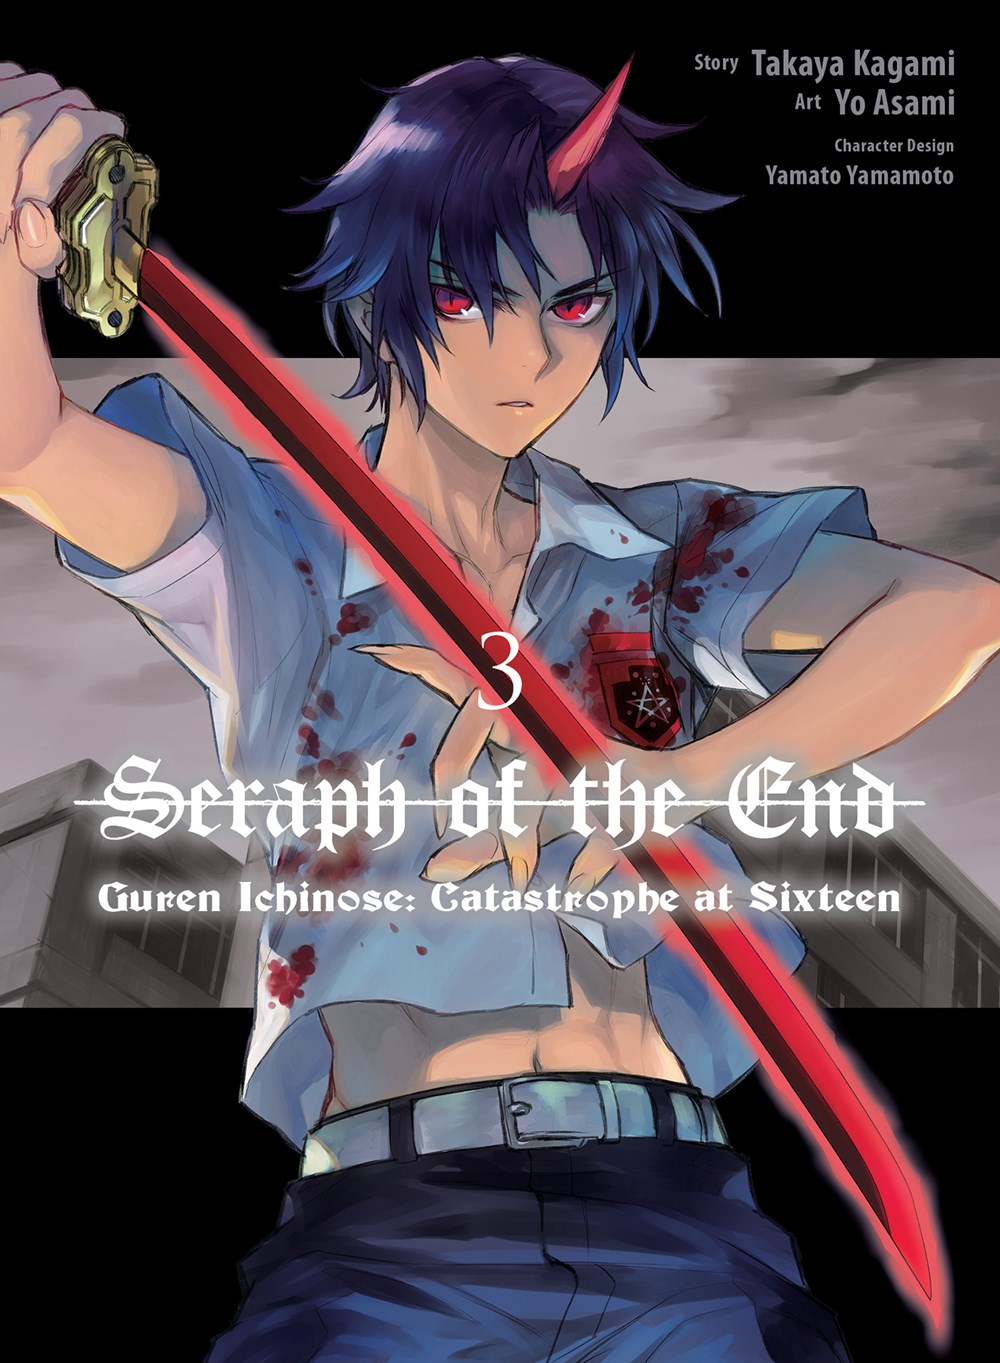 Seraph of the End: Guren Ichinose: Catastrophe at Sixteen Manga Volume 3 image count 0